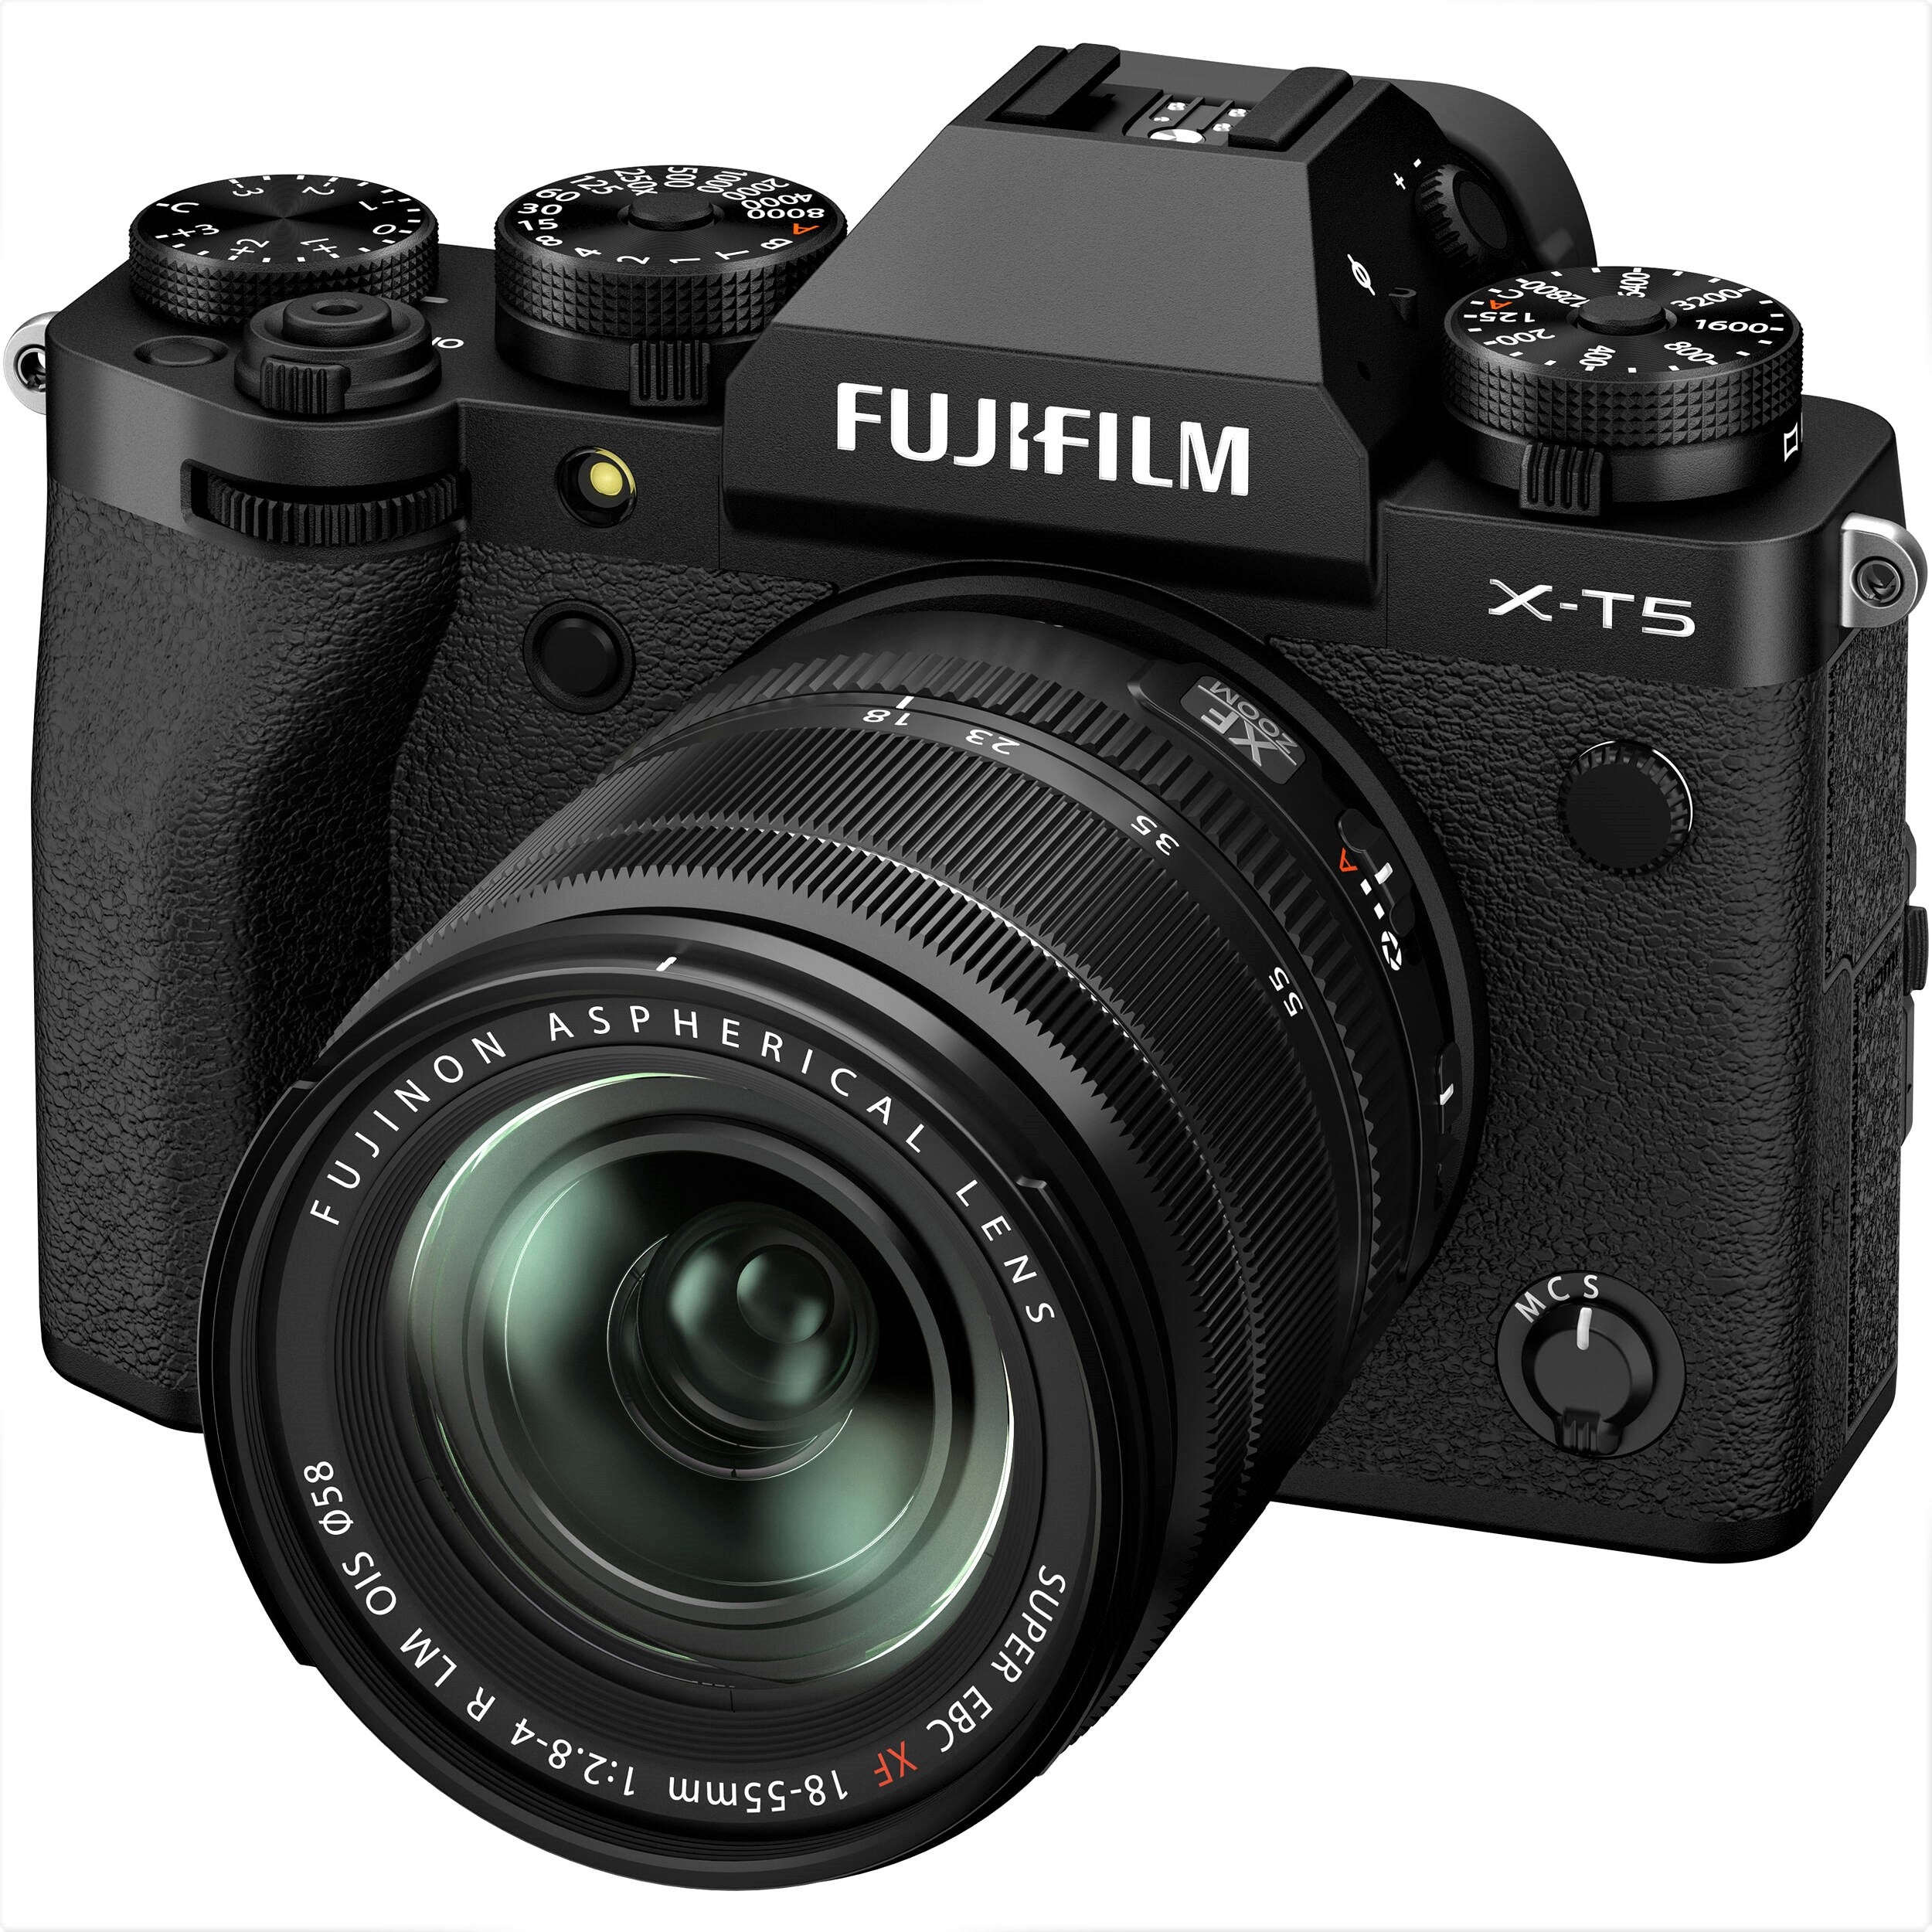 Fujifilm X-T5 Mirrorless Camera with 18-55mm Lens (Black)- Top View